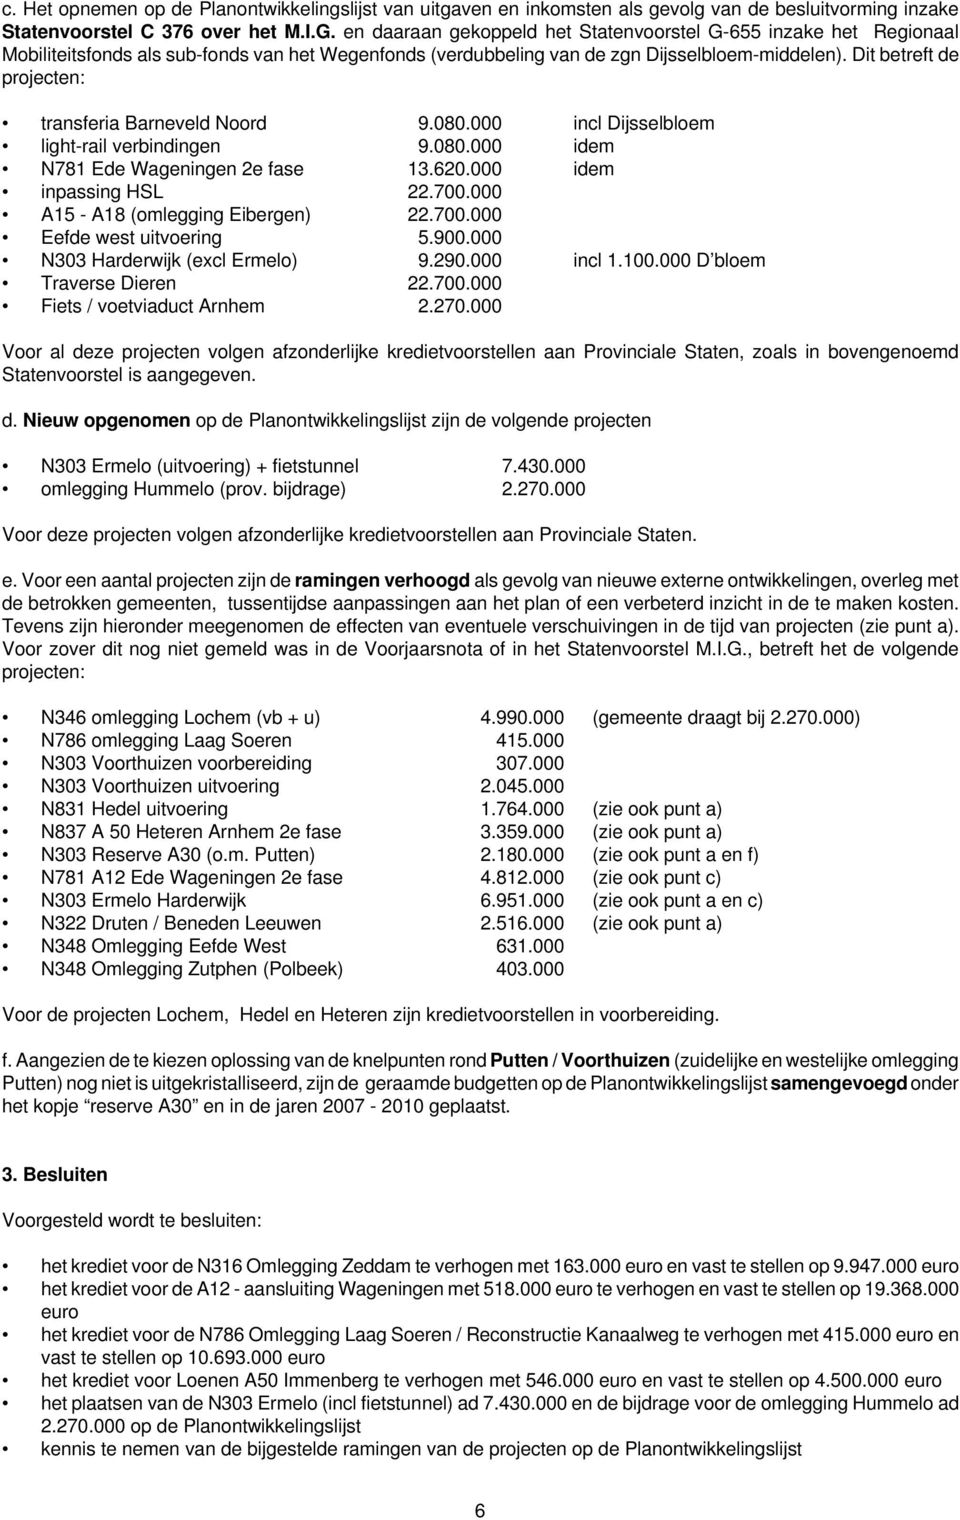 Dit betreft de projecten: transferia Barneveld Noord 9.080.000 incl Dijsselbloem light-rail verbindingen 9.080.000 idem N781 Ede Wageningen 2e fase 13.620.000 idem inpassing HSL 22.700.